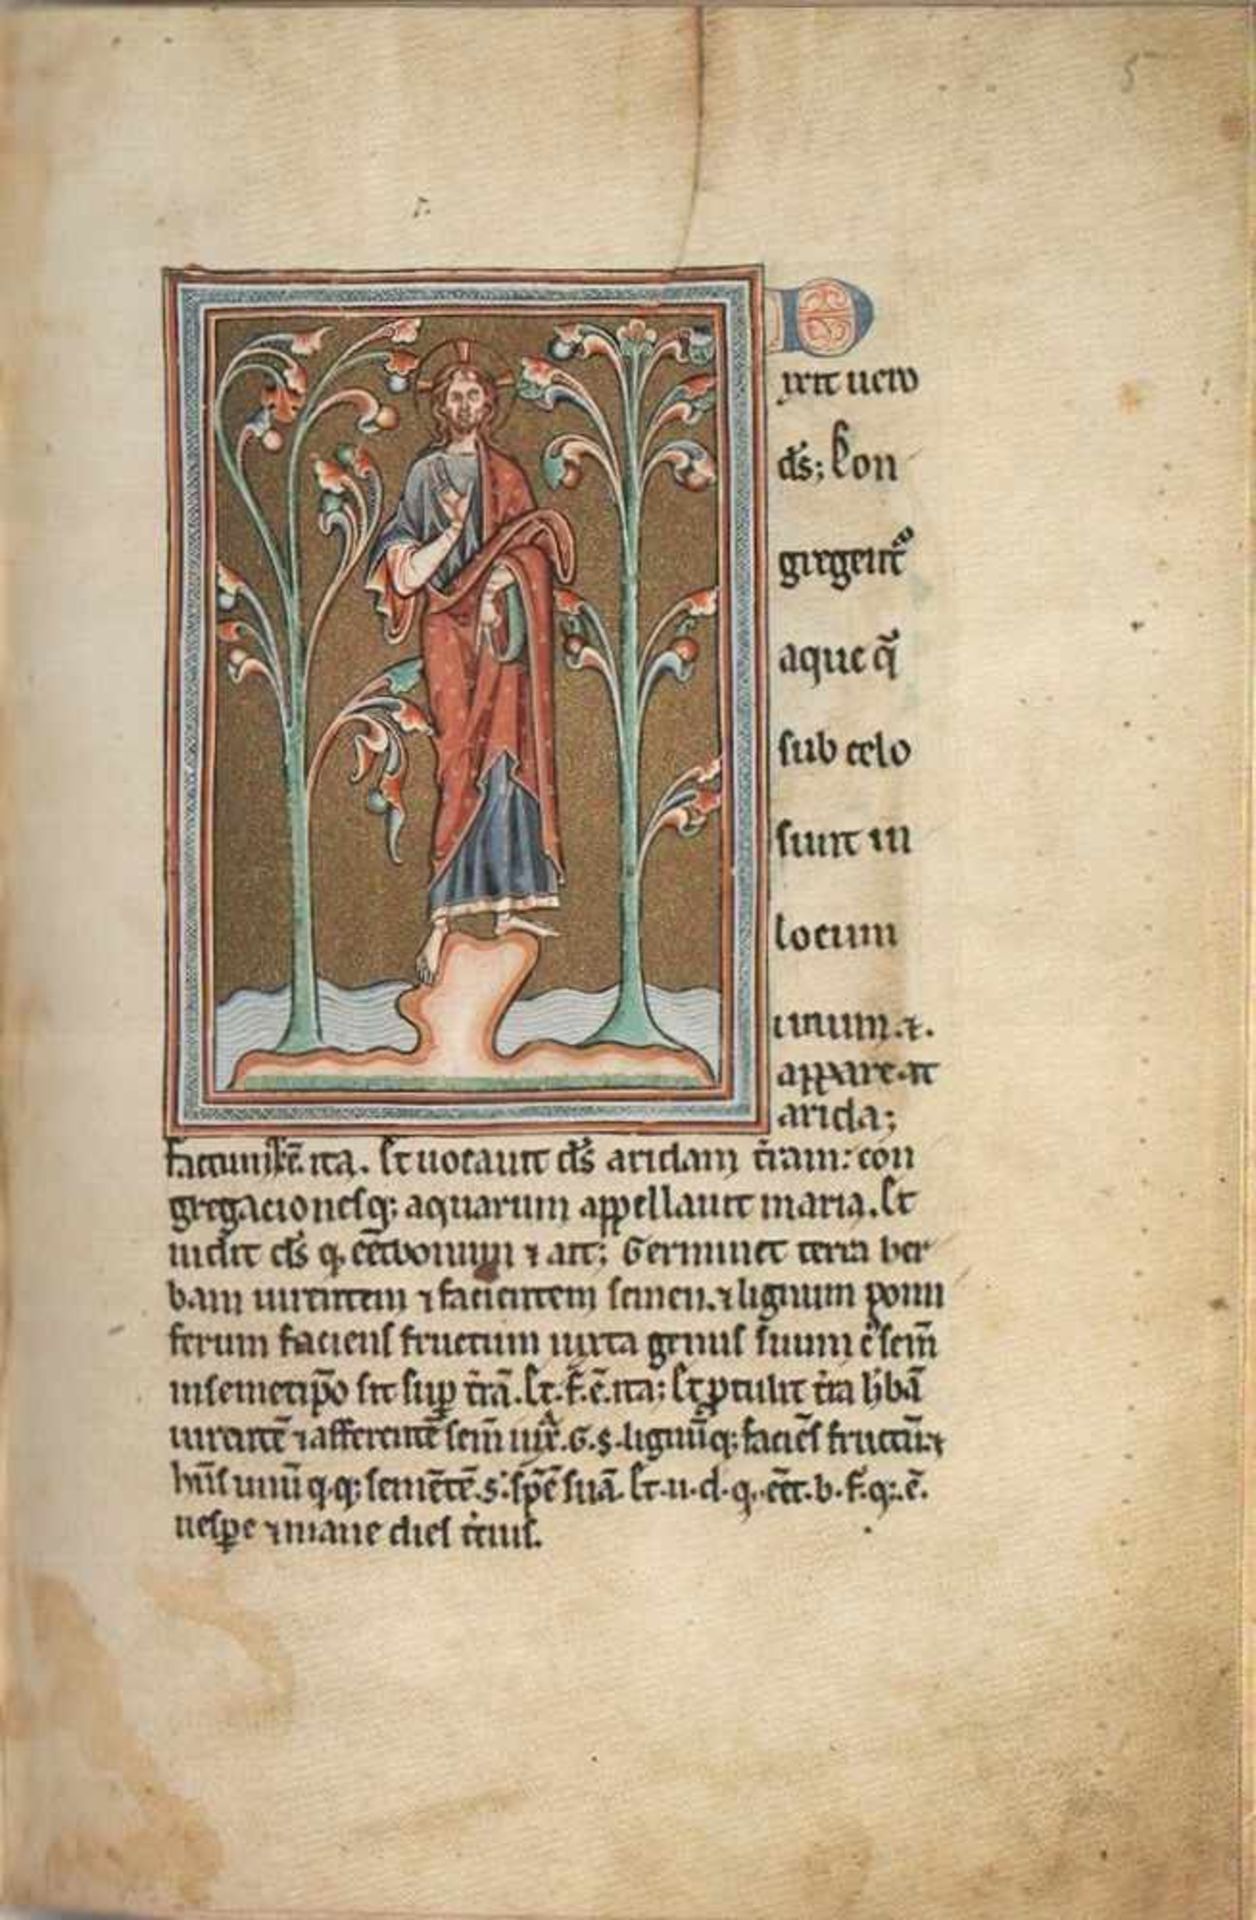 Ashmole - Bestiarium.MS. ASHMOLE - 1511 - BESTIARIUM. Bodleian Library, Oxford. Faksimile - Ausgabe.